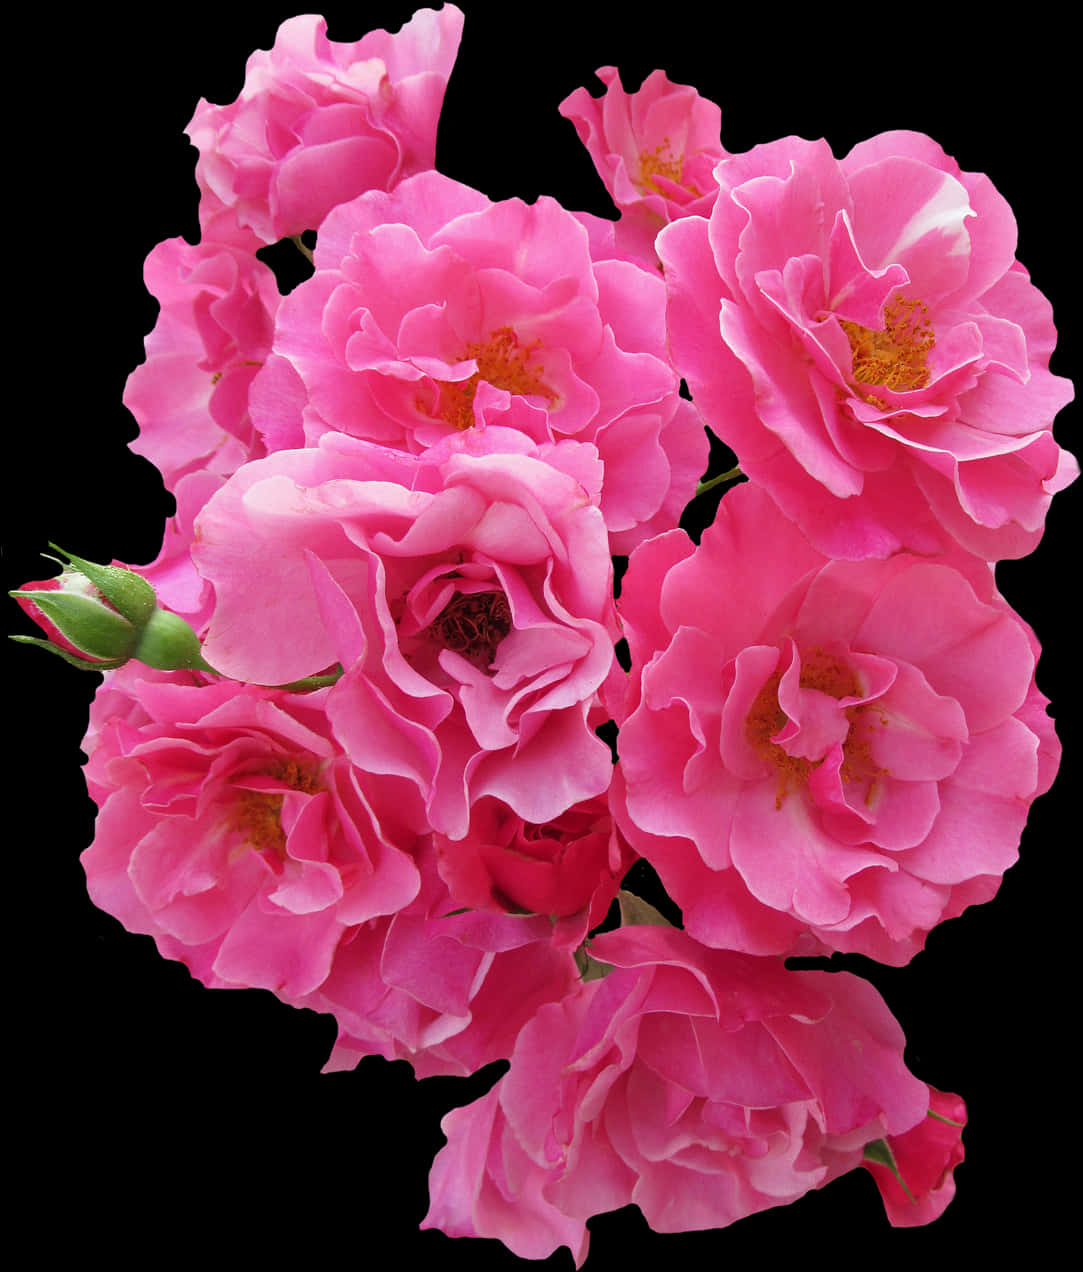 Vibrant_ Pink_ Roses_ Black_ Background.jpg